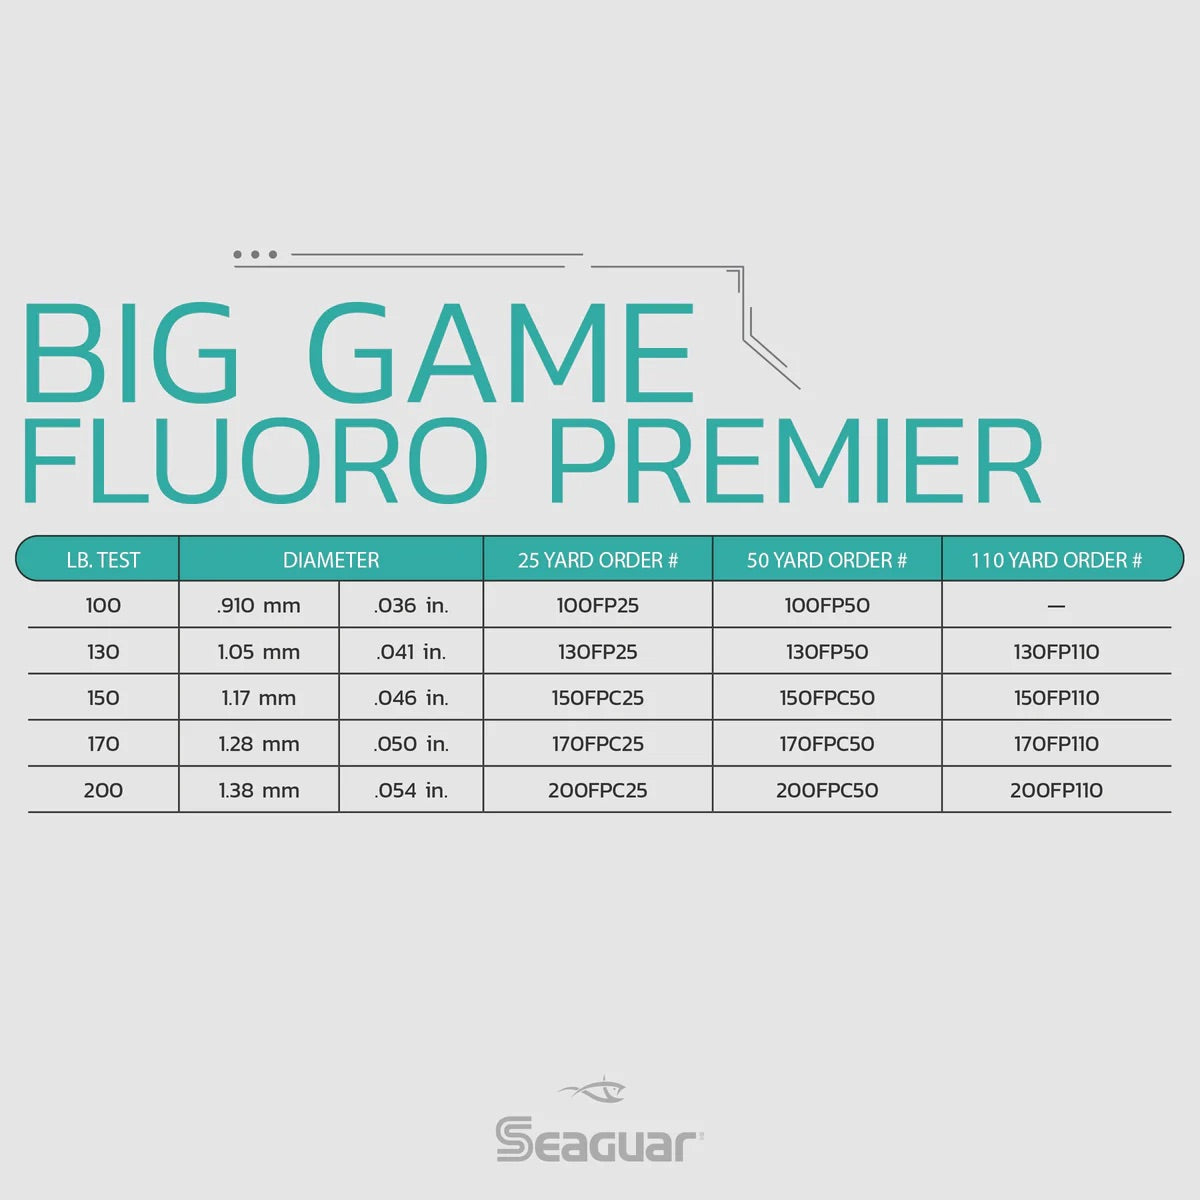 Seaguar Premier Big Game Fluorocarbon Leader Material Size Chart